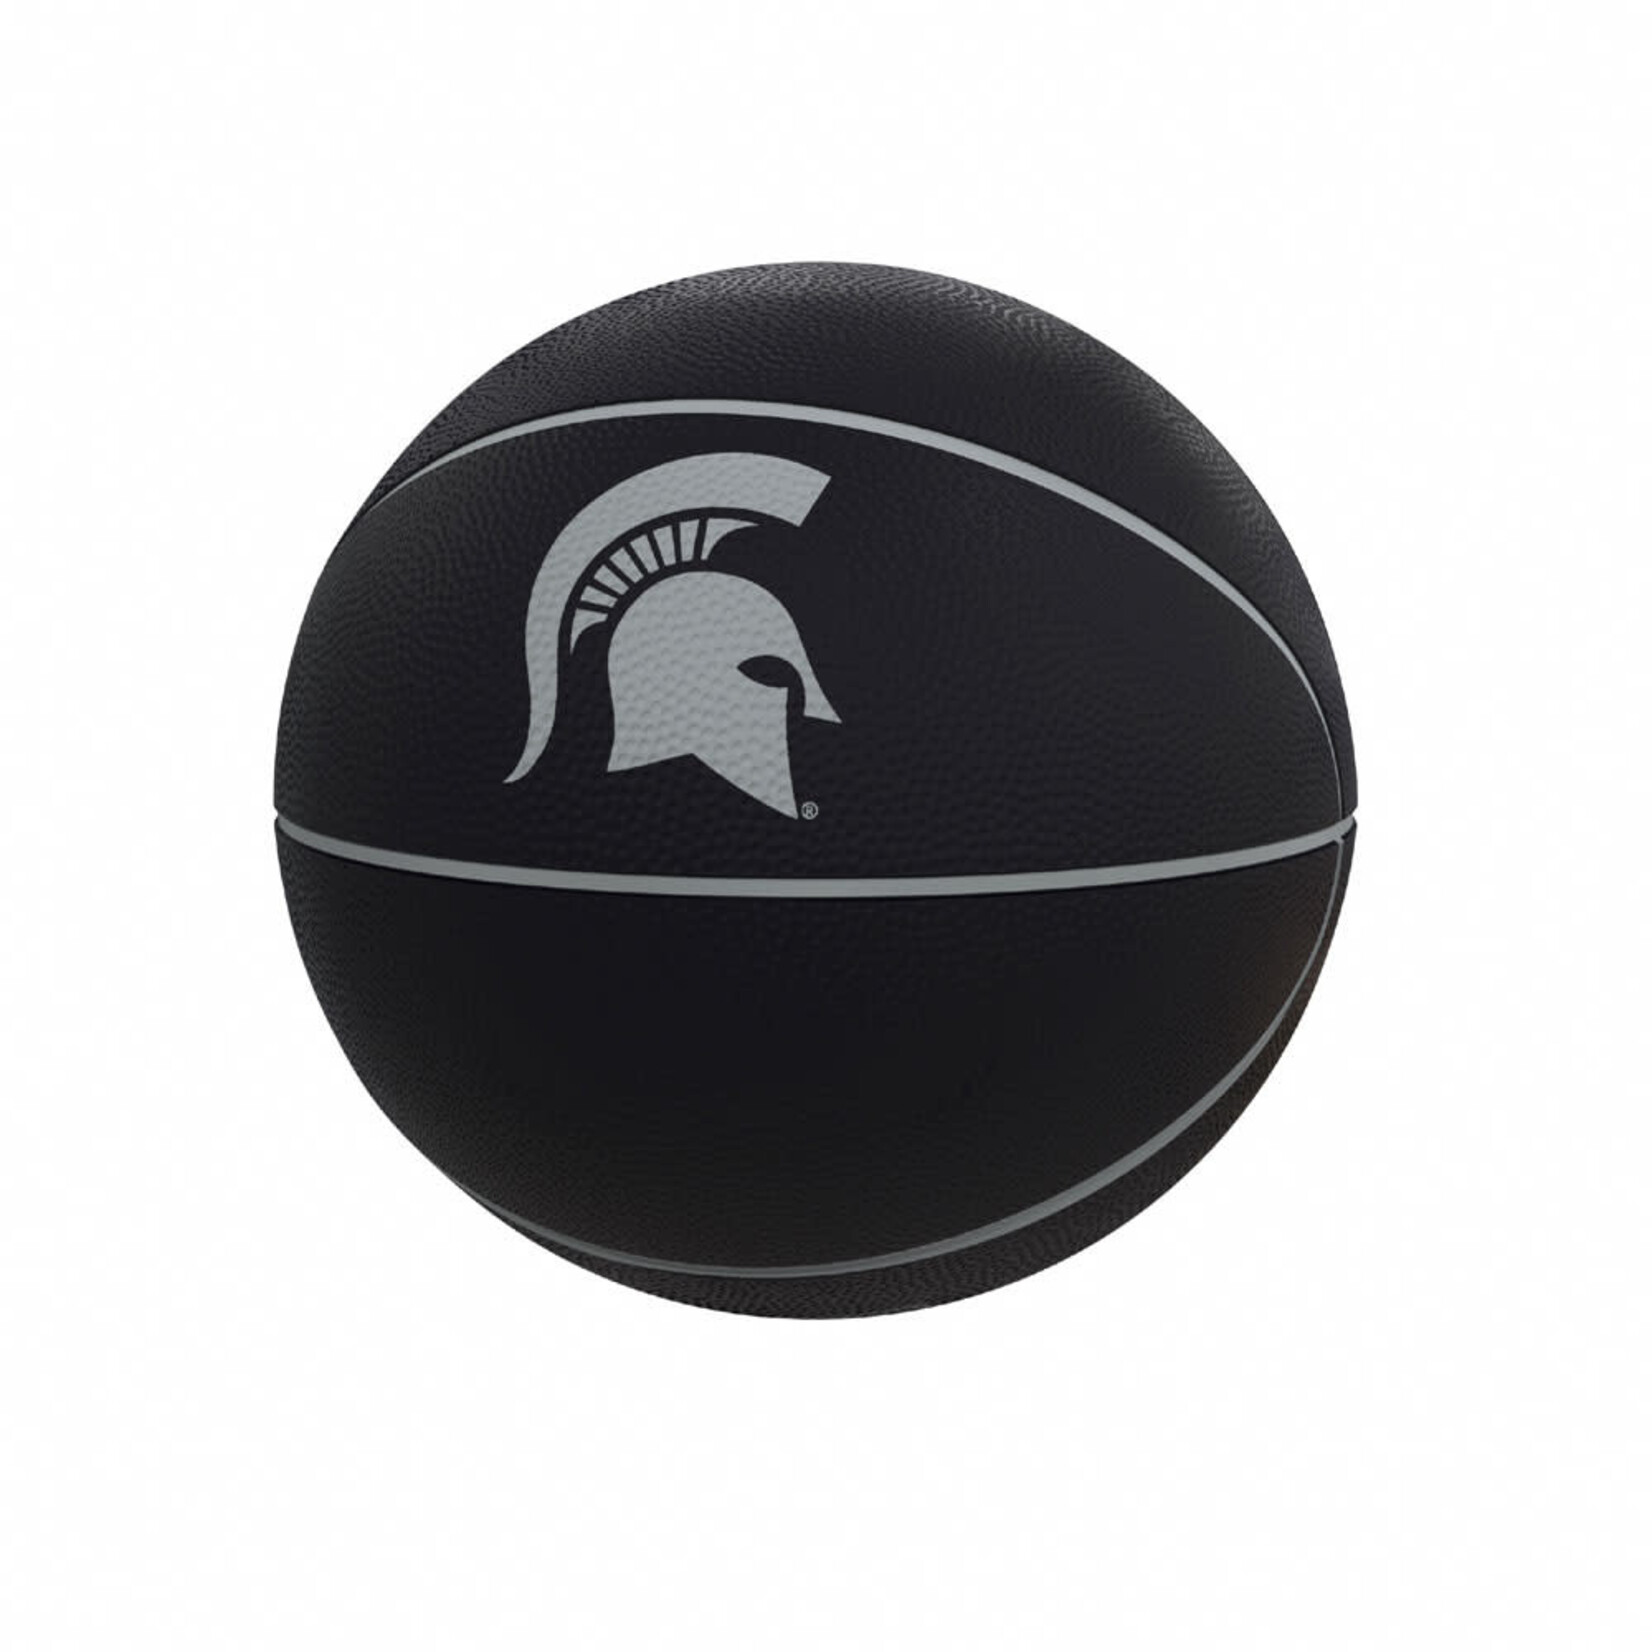 Logo Brands NCAA Michigan State University Basketball Composite Full-Size Black